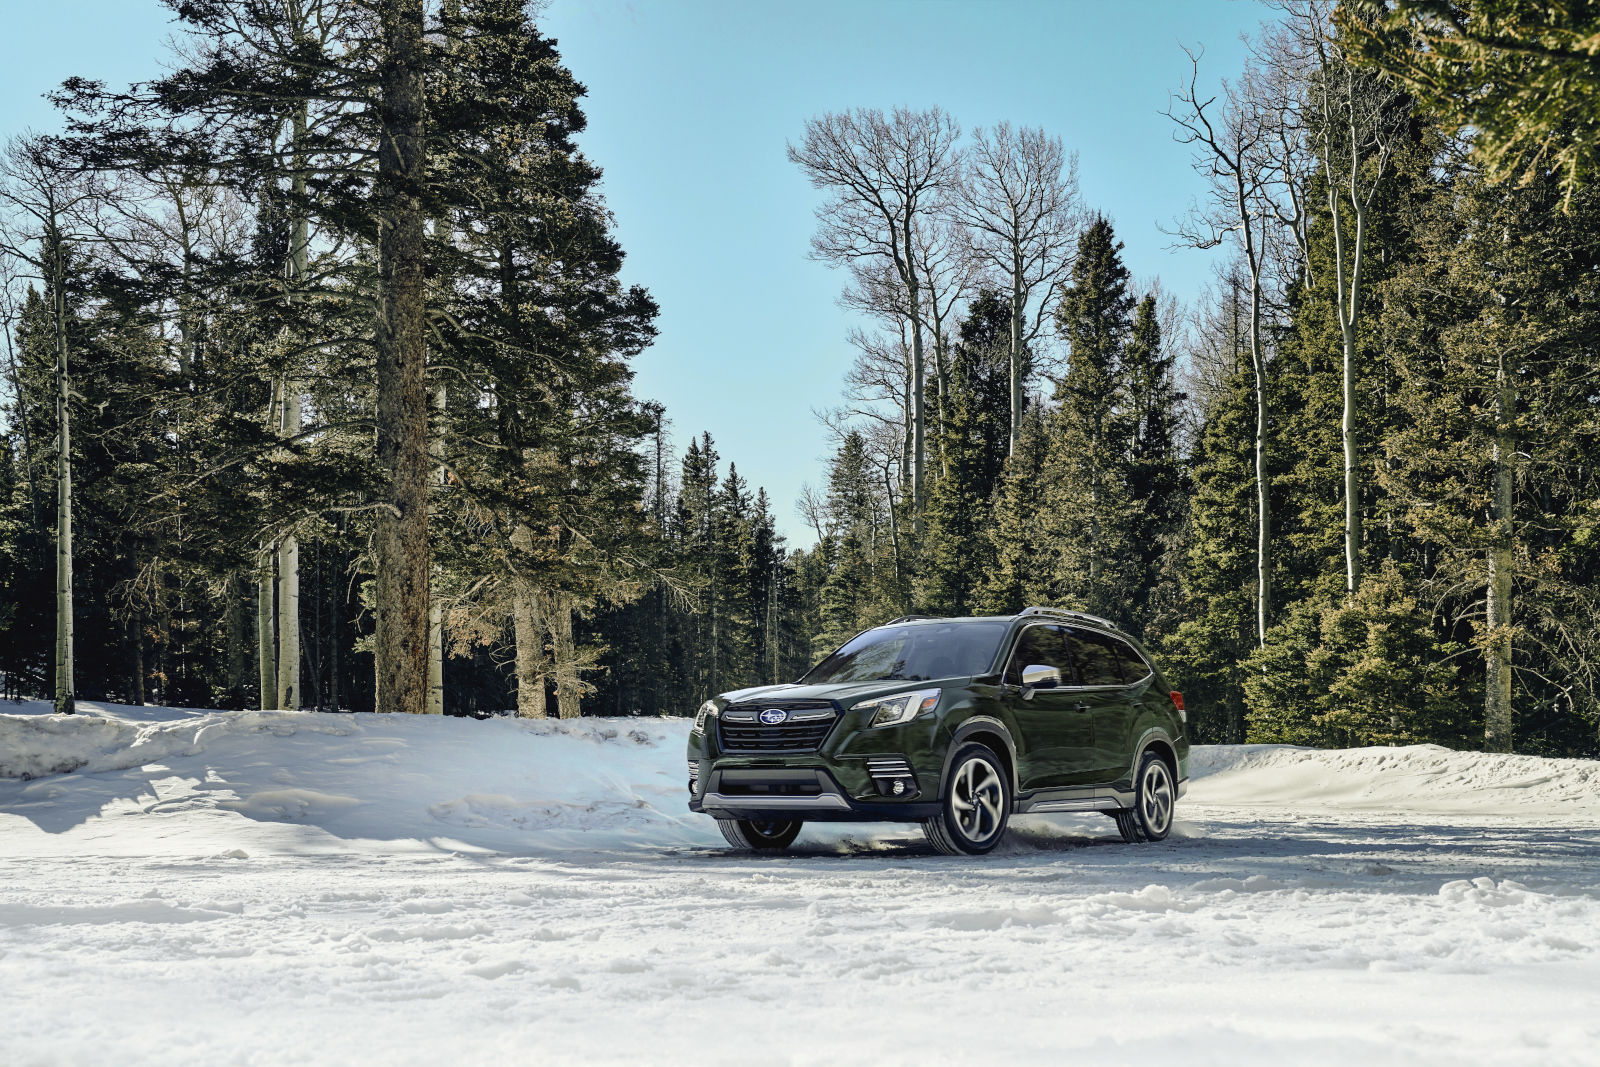 What Makes Subaru Symmetrical All-Wheel Drive So Impressive in Winter?